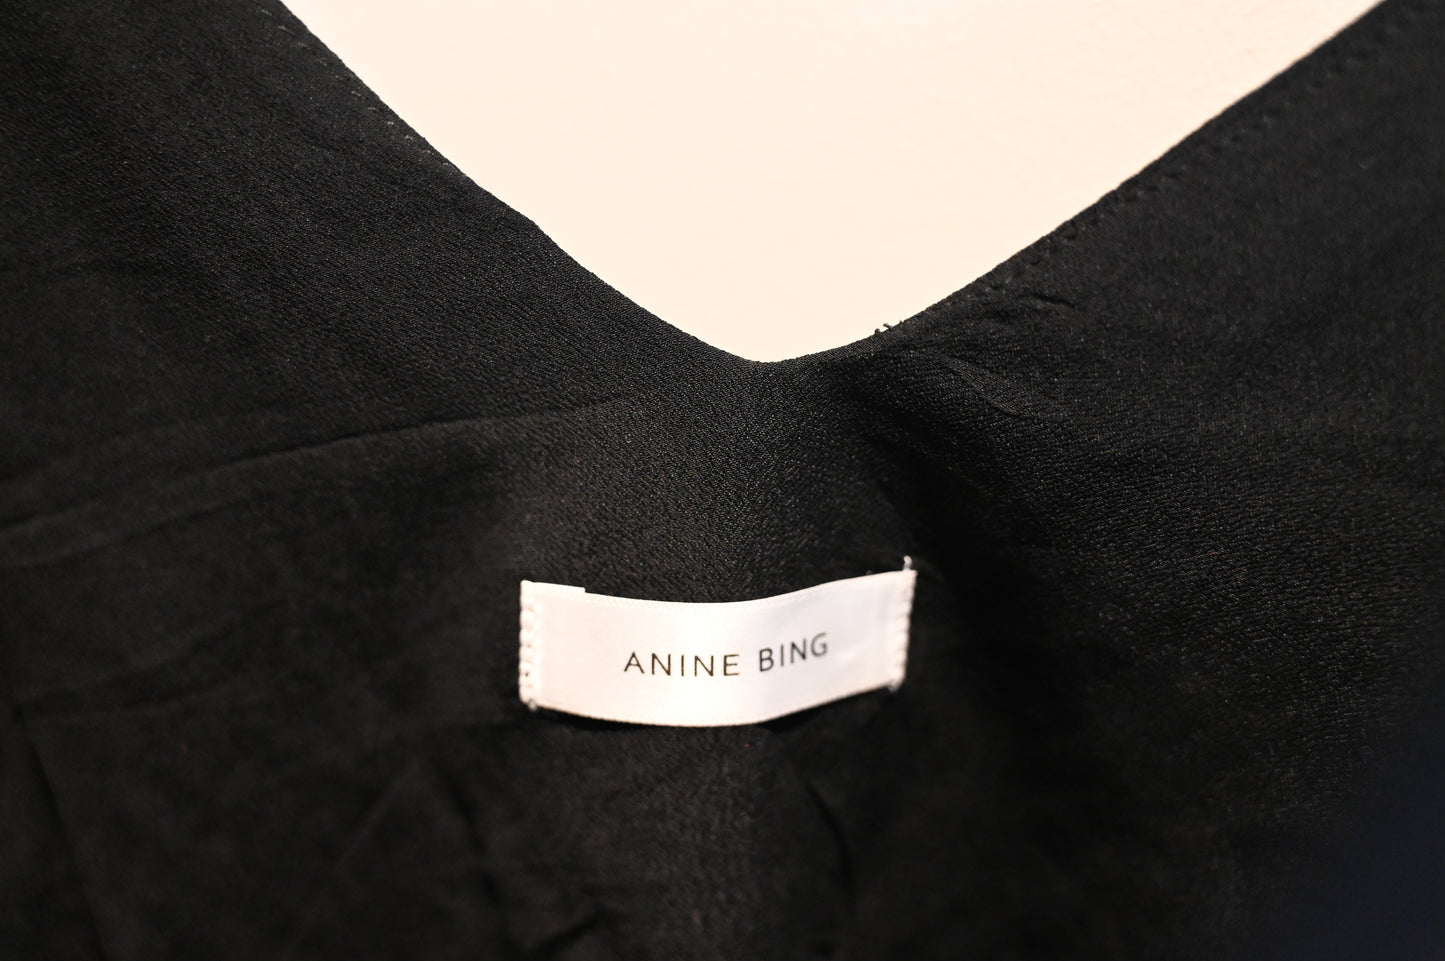 Anine Bing black cami